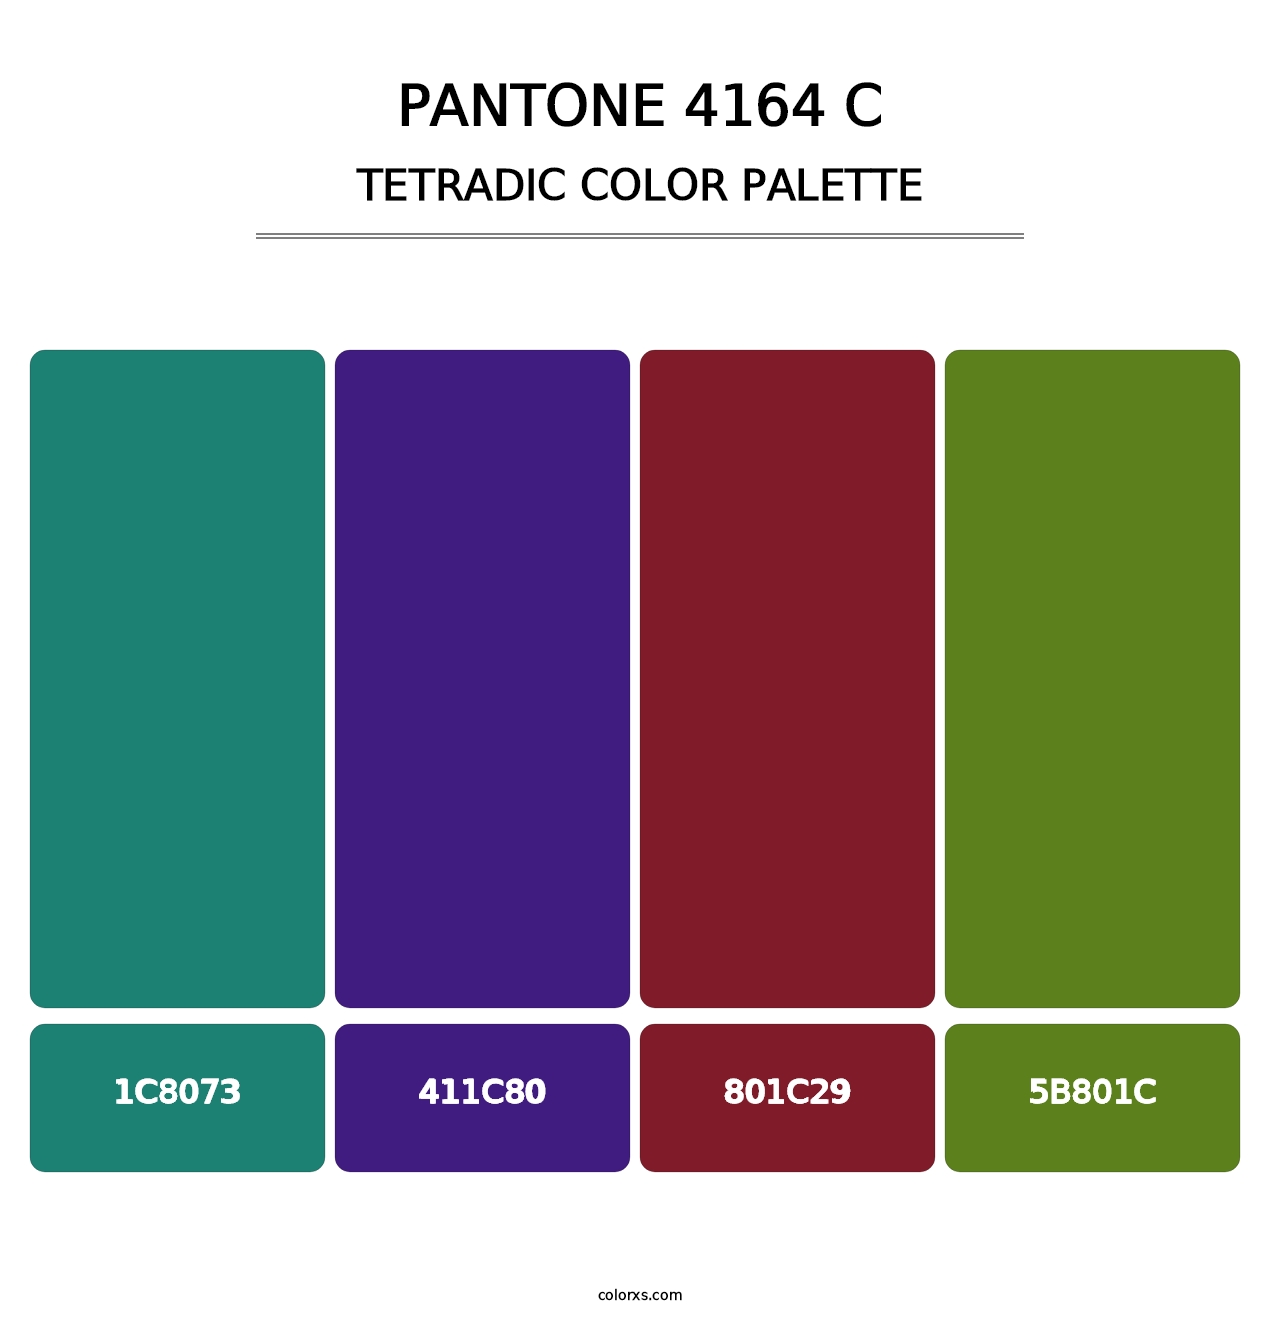 PANTONE 4164 C - Tetradic Color Palette